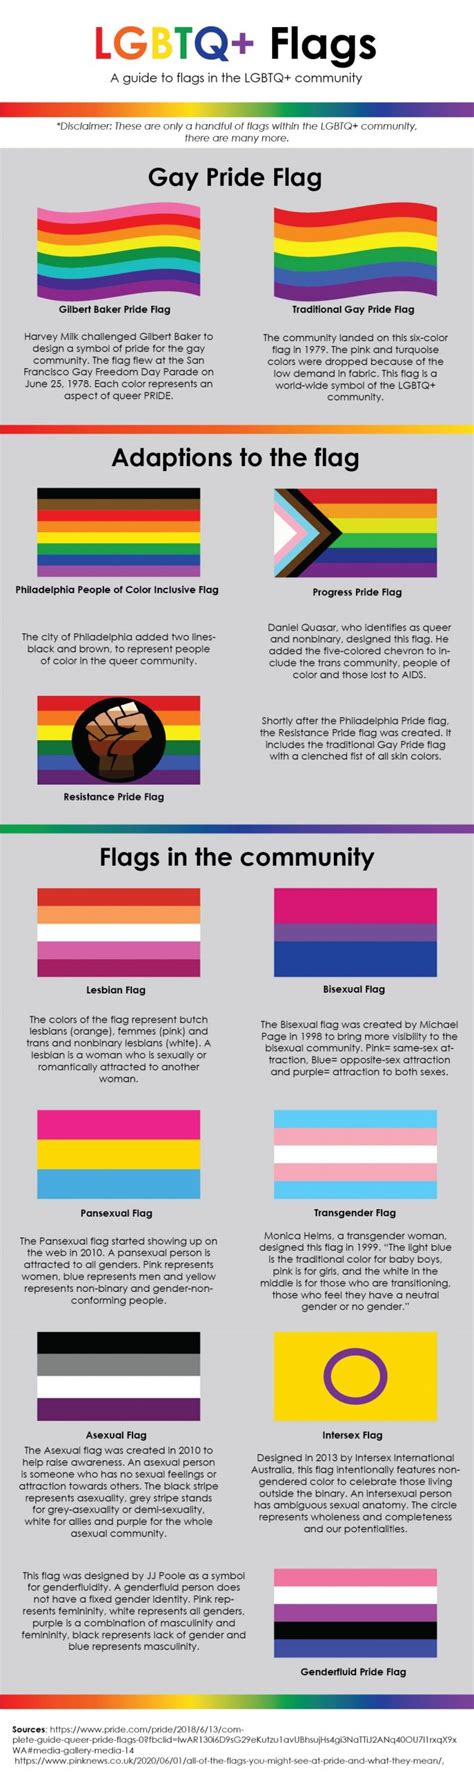 lgbtq meaning of each flag lgbt pride flag and x28 lesbian gay